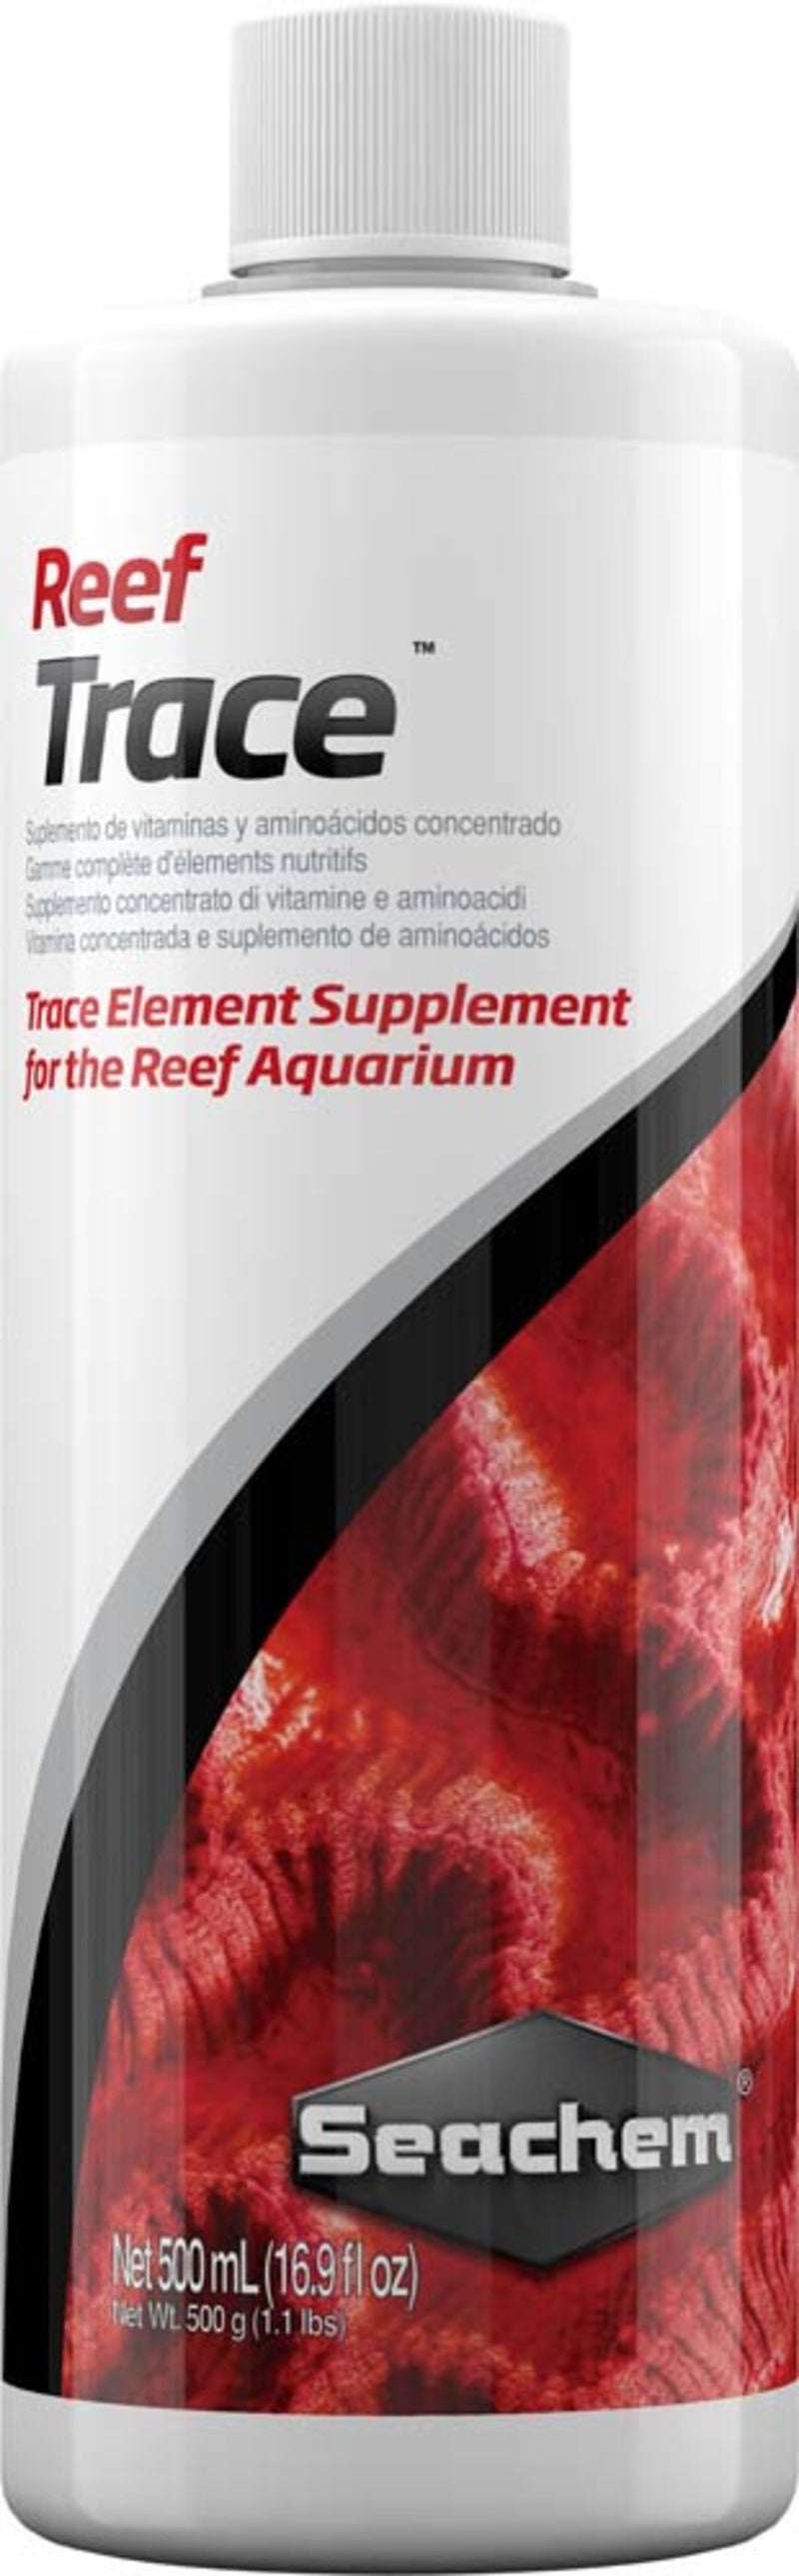 Seachem Laboratories Reef Trace Supplement